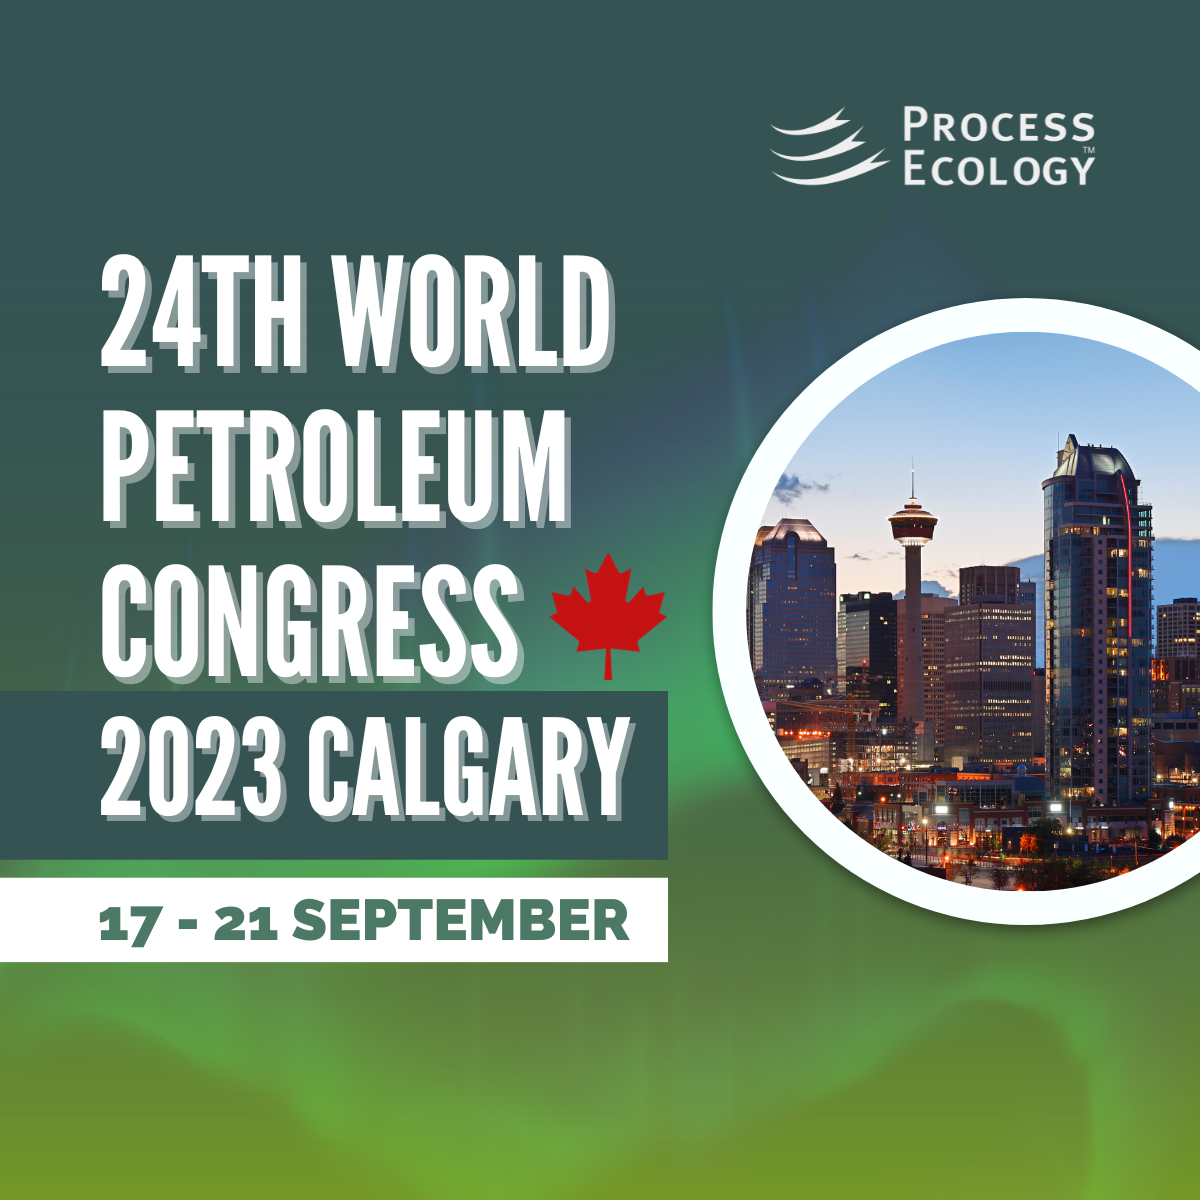 World Petroleum Congress Calgary 2023